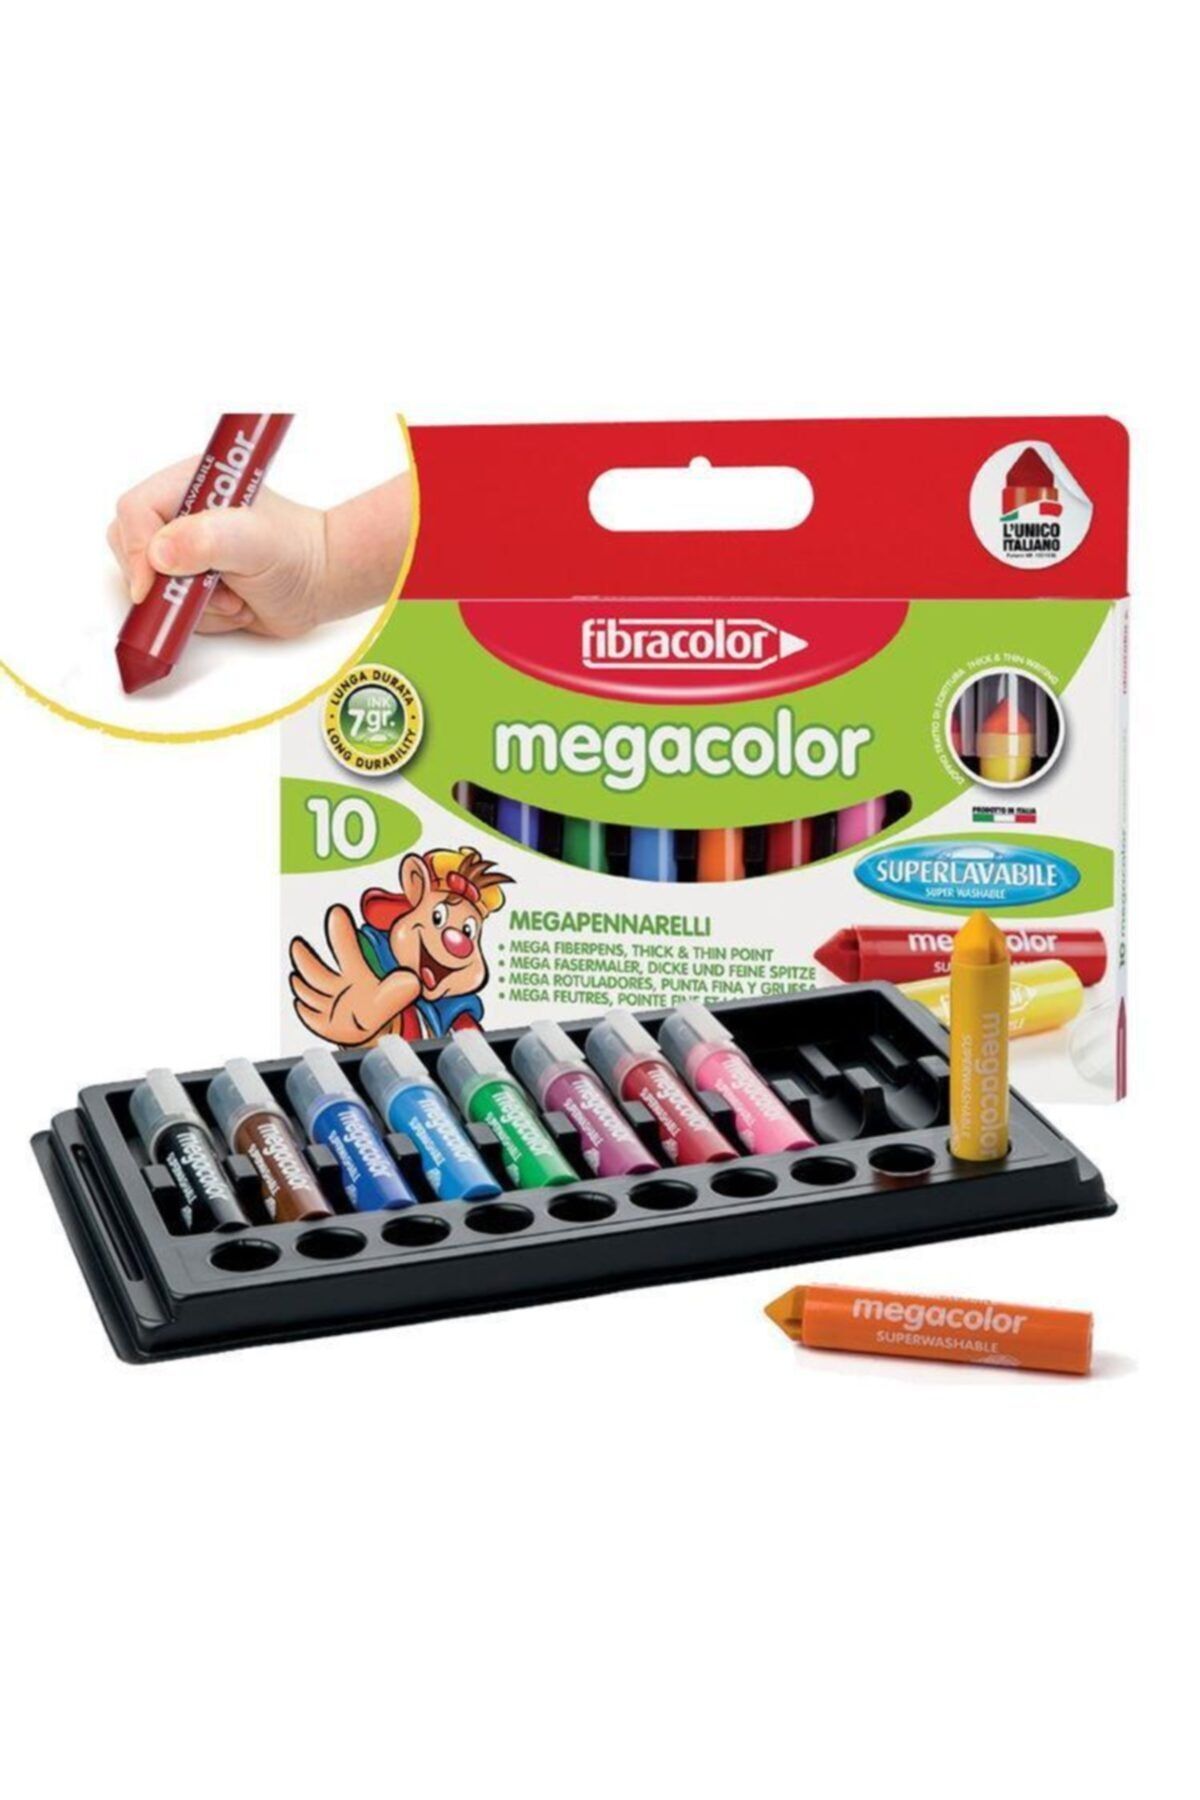 Fibracolor Megacolor Super Washable Su Bazlı Keçeli Kalem 10 Renk